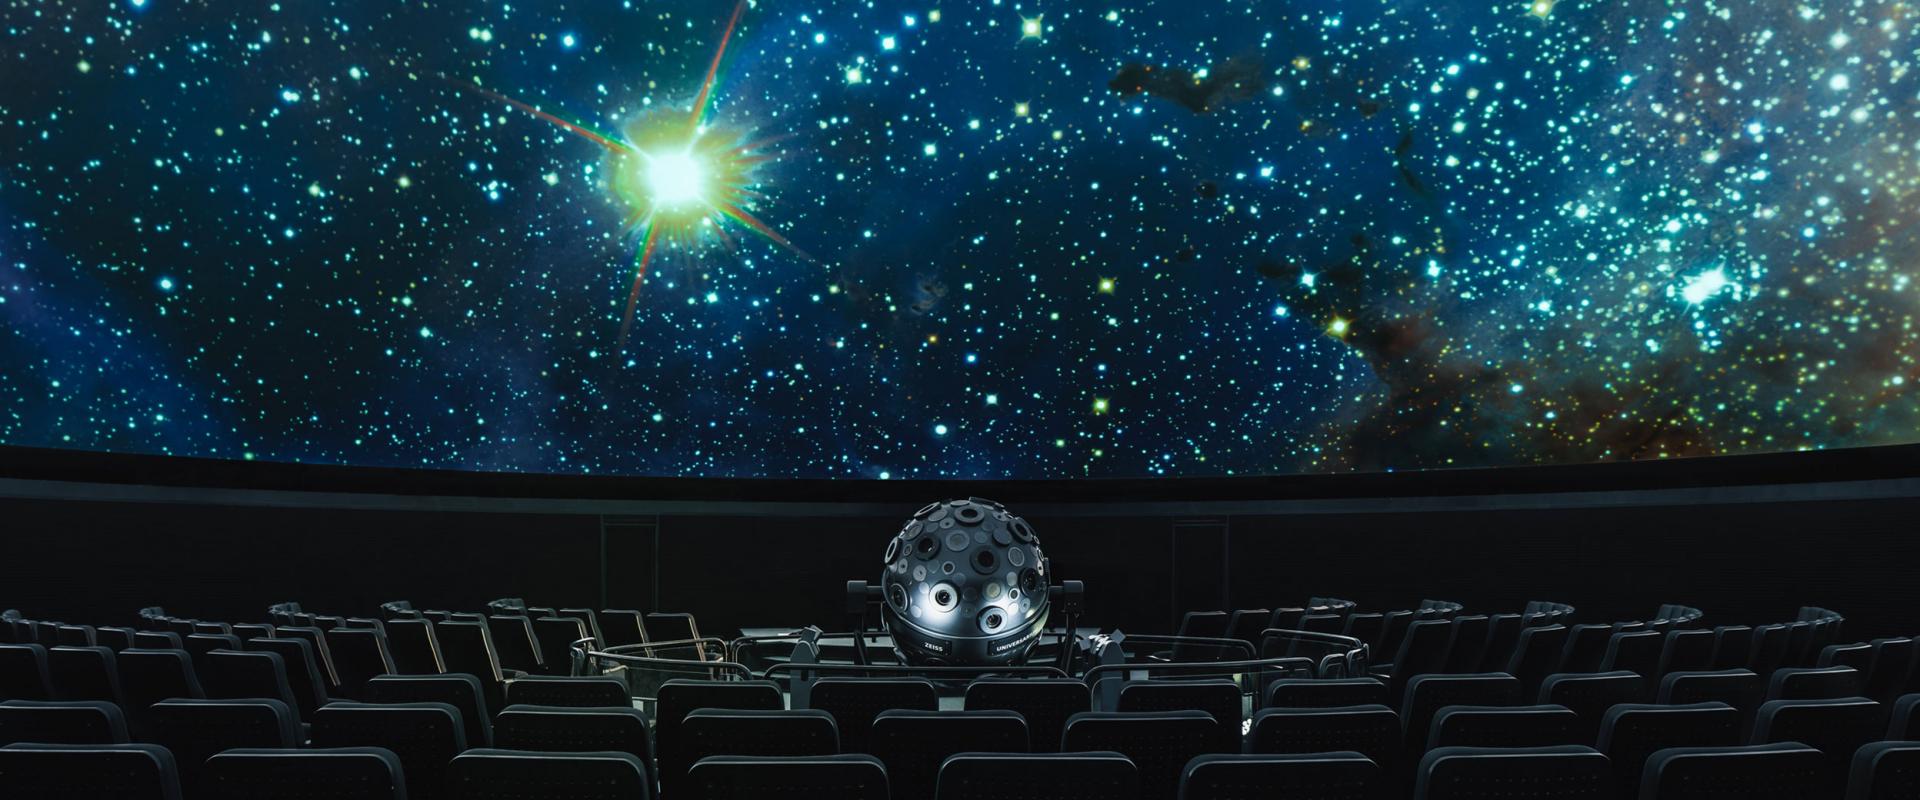 Planetariumssaal im Zeiss-Großlplanetarium. © SPB, Foto: Natalie Toczek